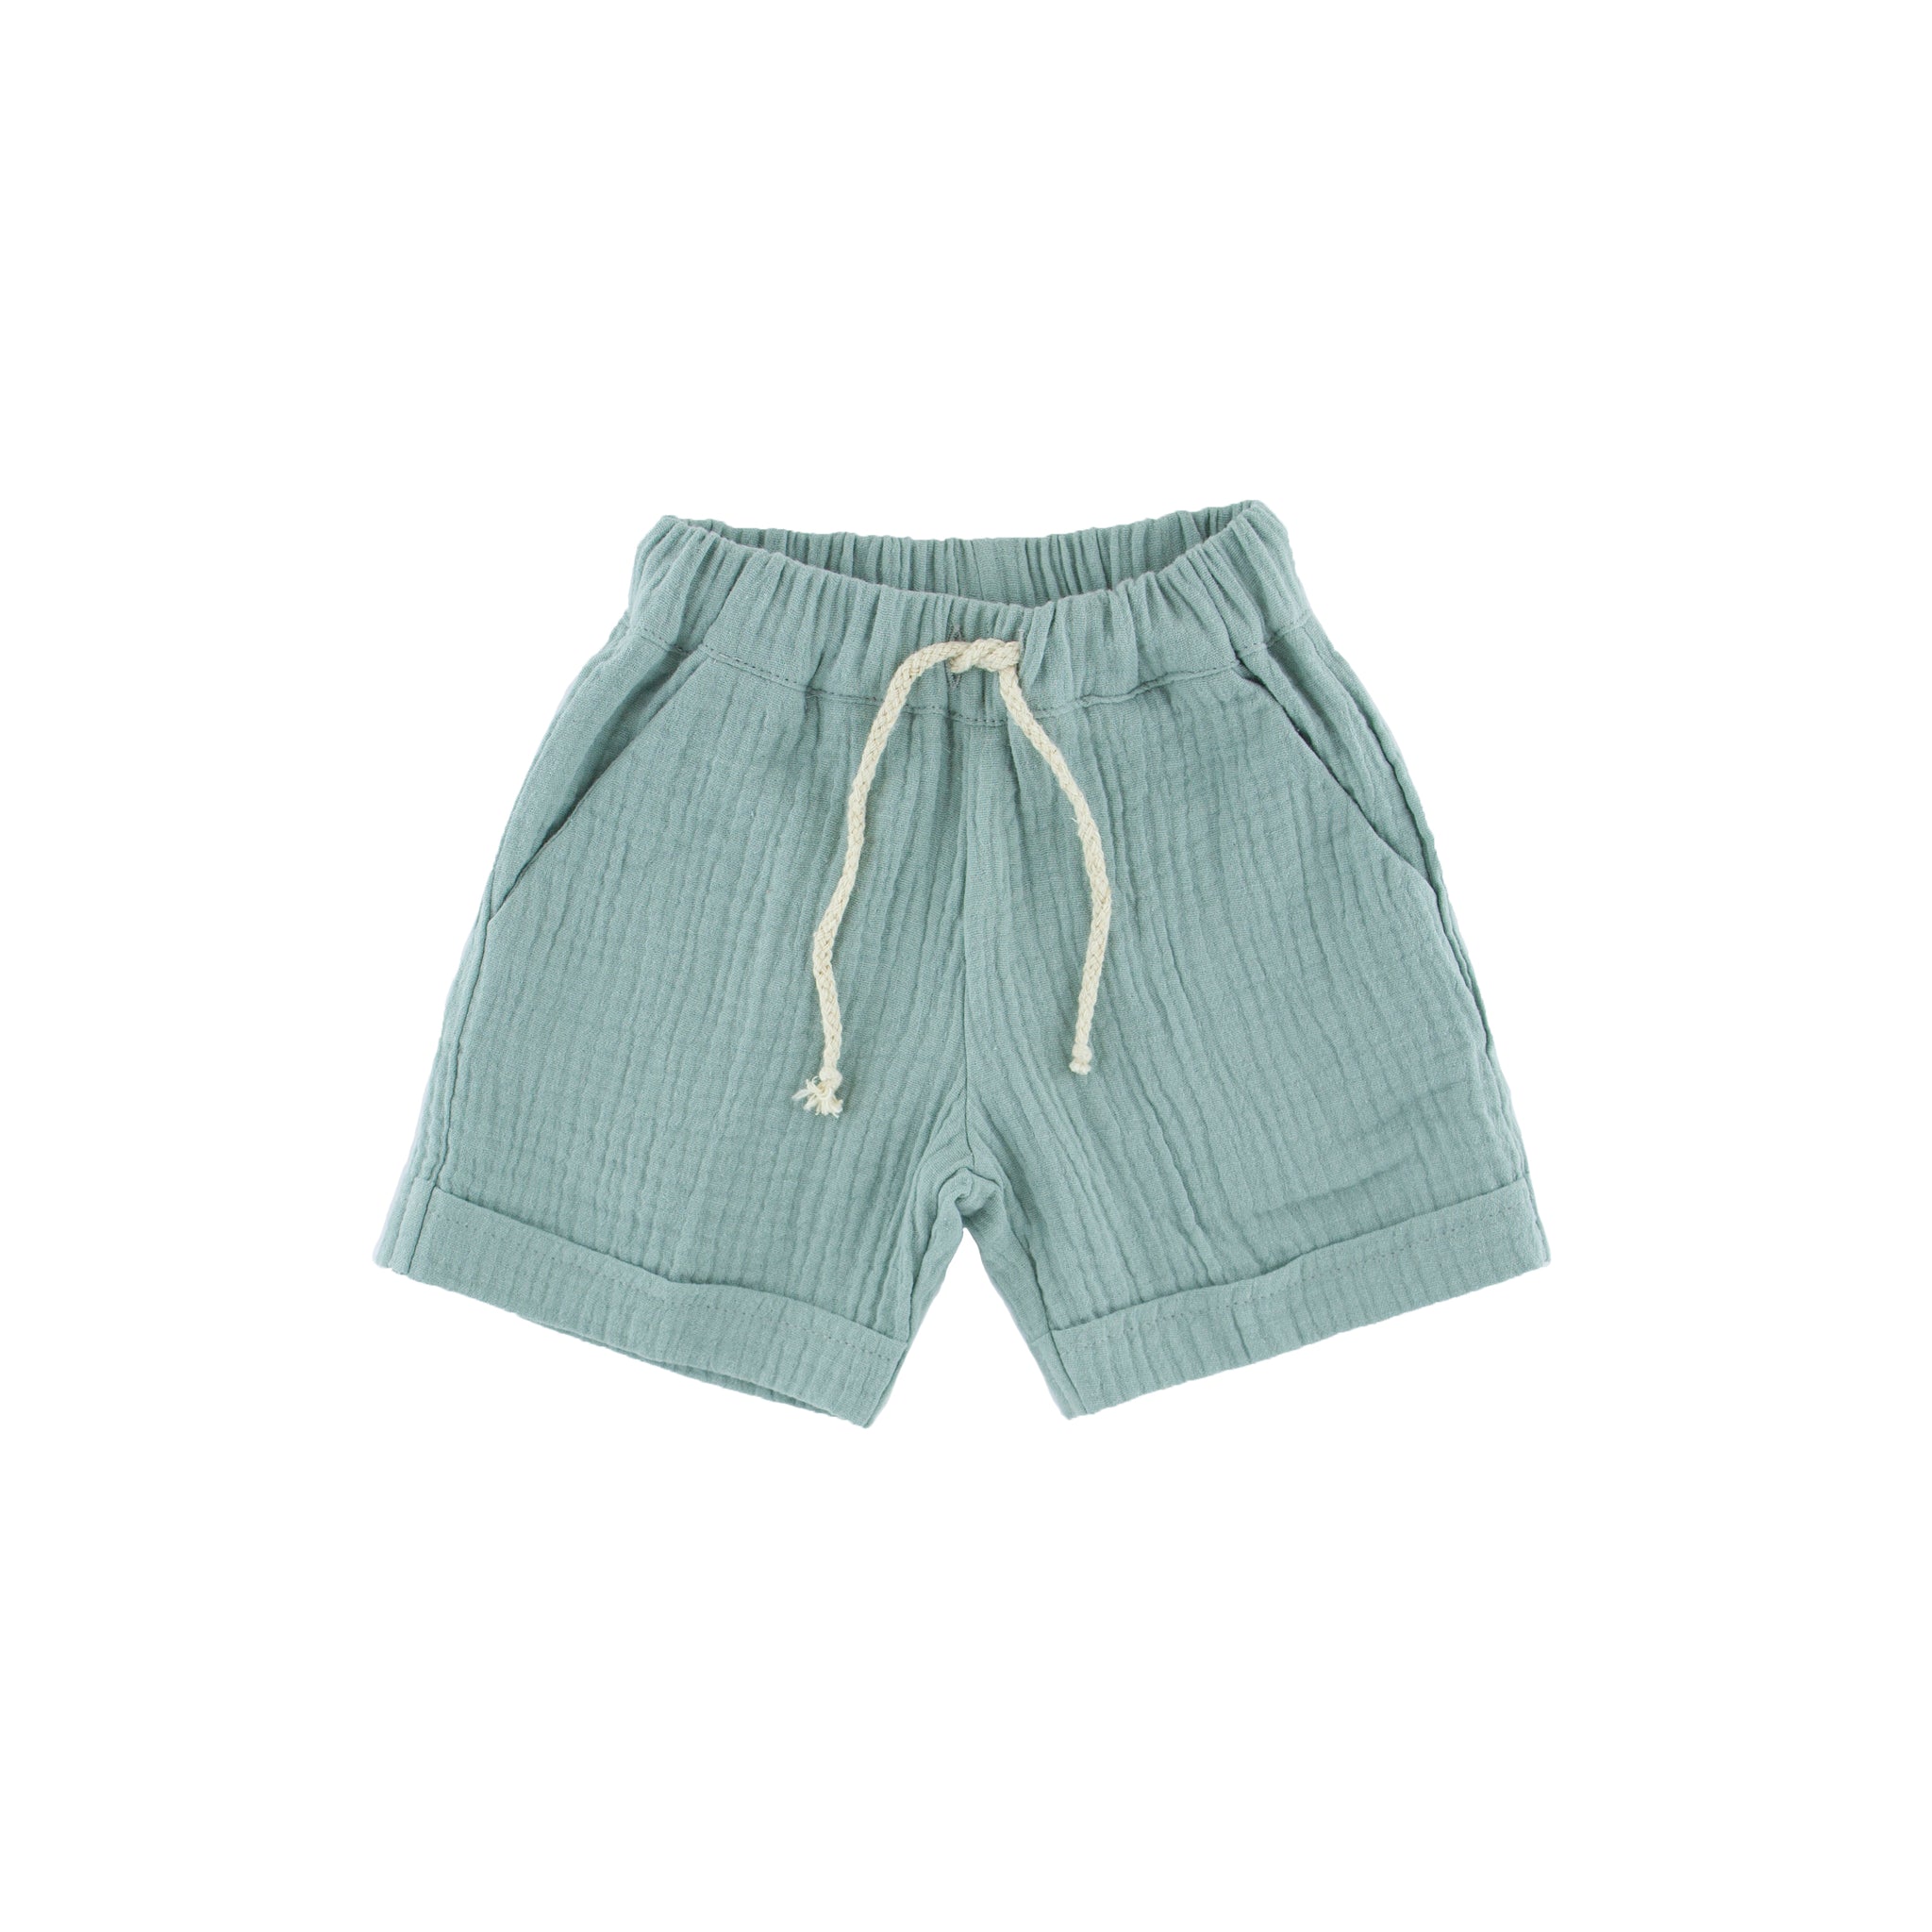 Julian shorts - soft green